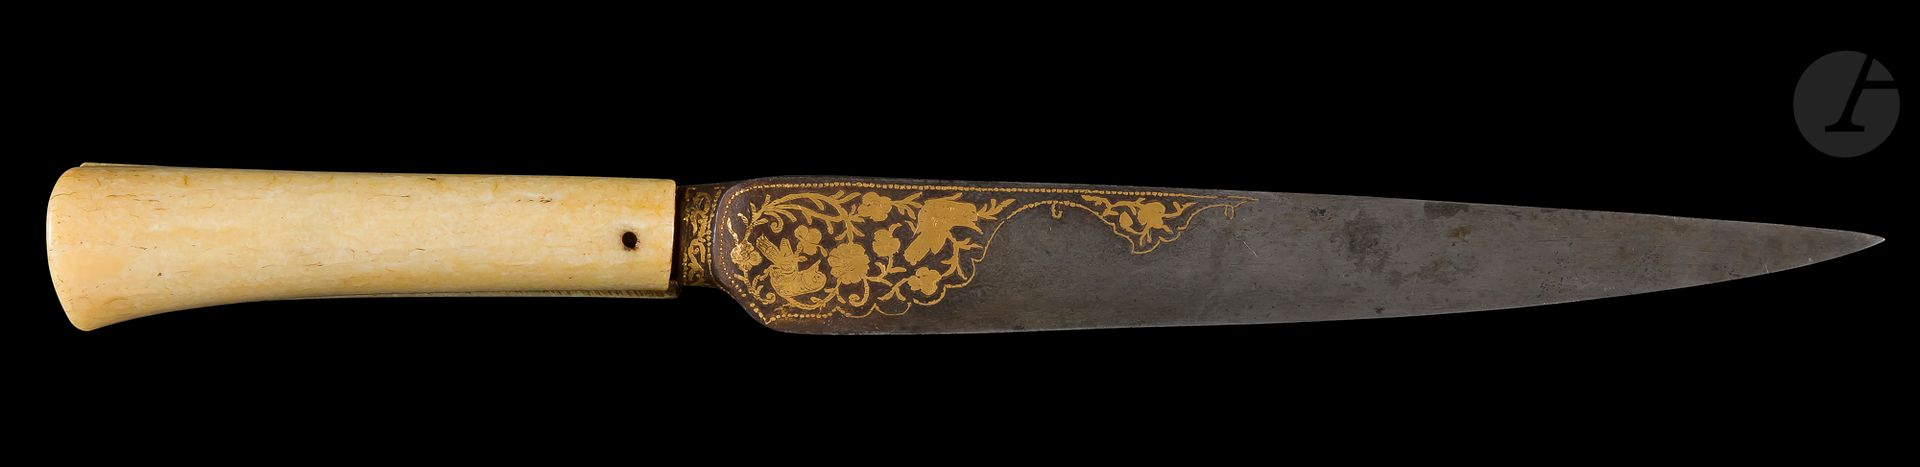 Null Kard dagger, India or Iran qâjâr, 19th century
Single-edged straight blade &hellip;